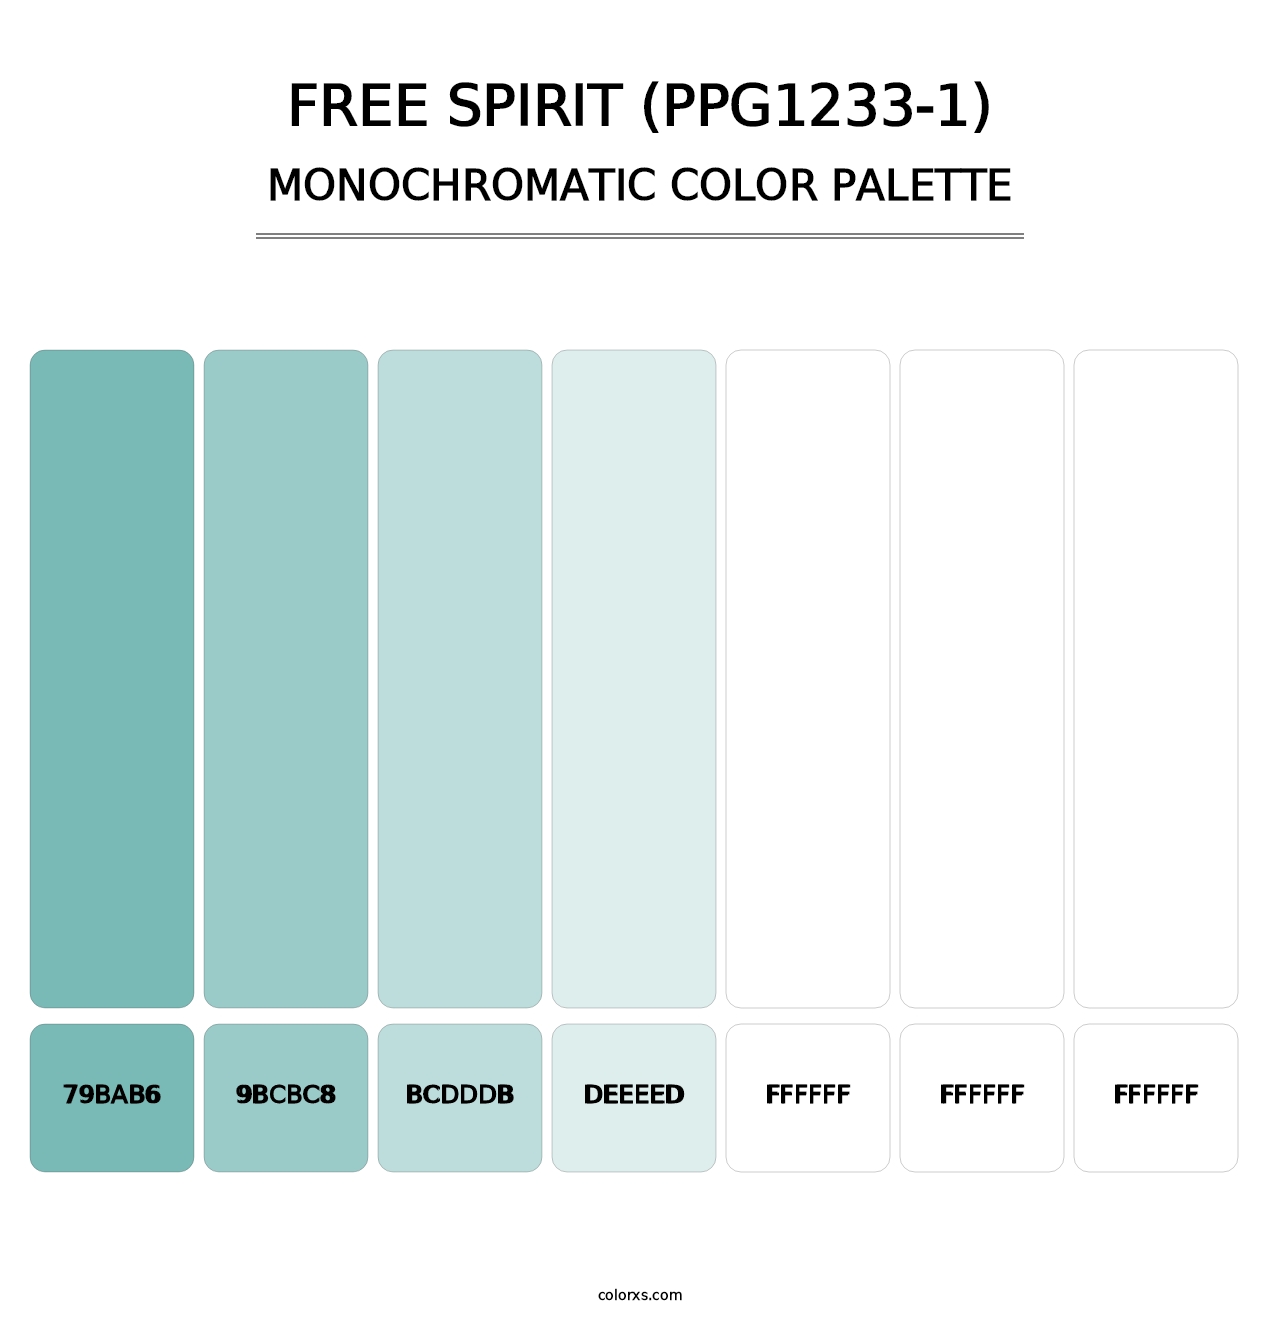 Free Spirit (PPG1233-1) - Monochromatic Color Palette